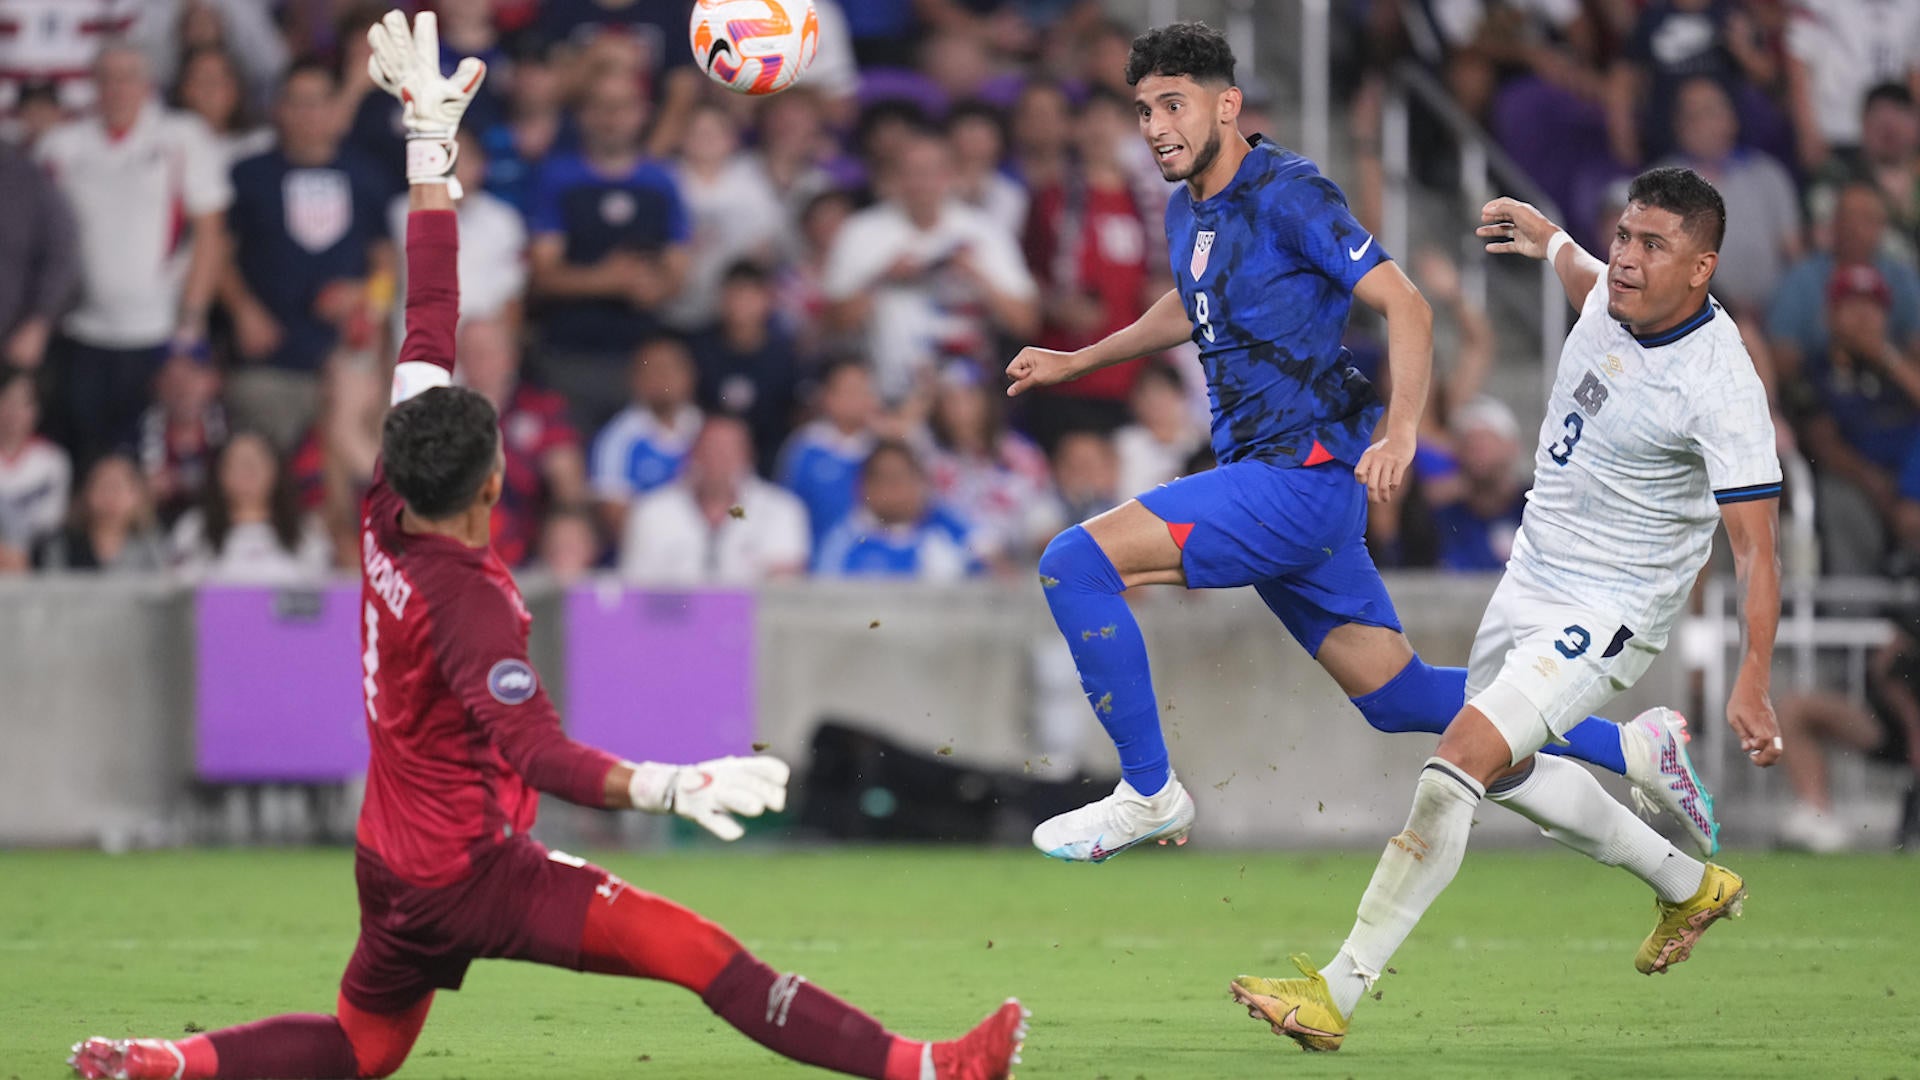 Highlights: United States El Salvador Live Stream of Soccer - CBSSports.com